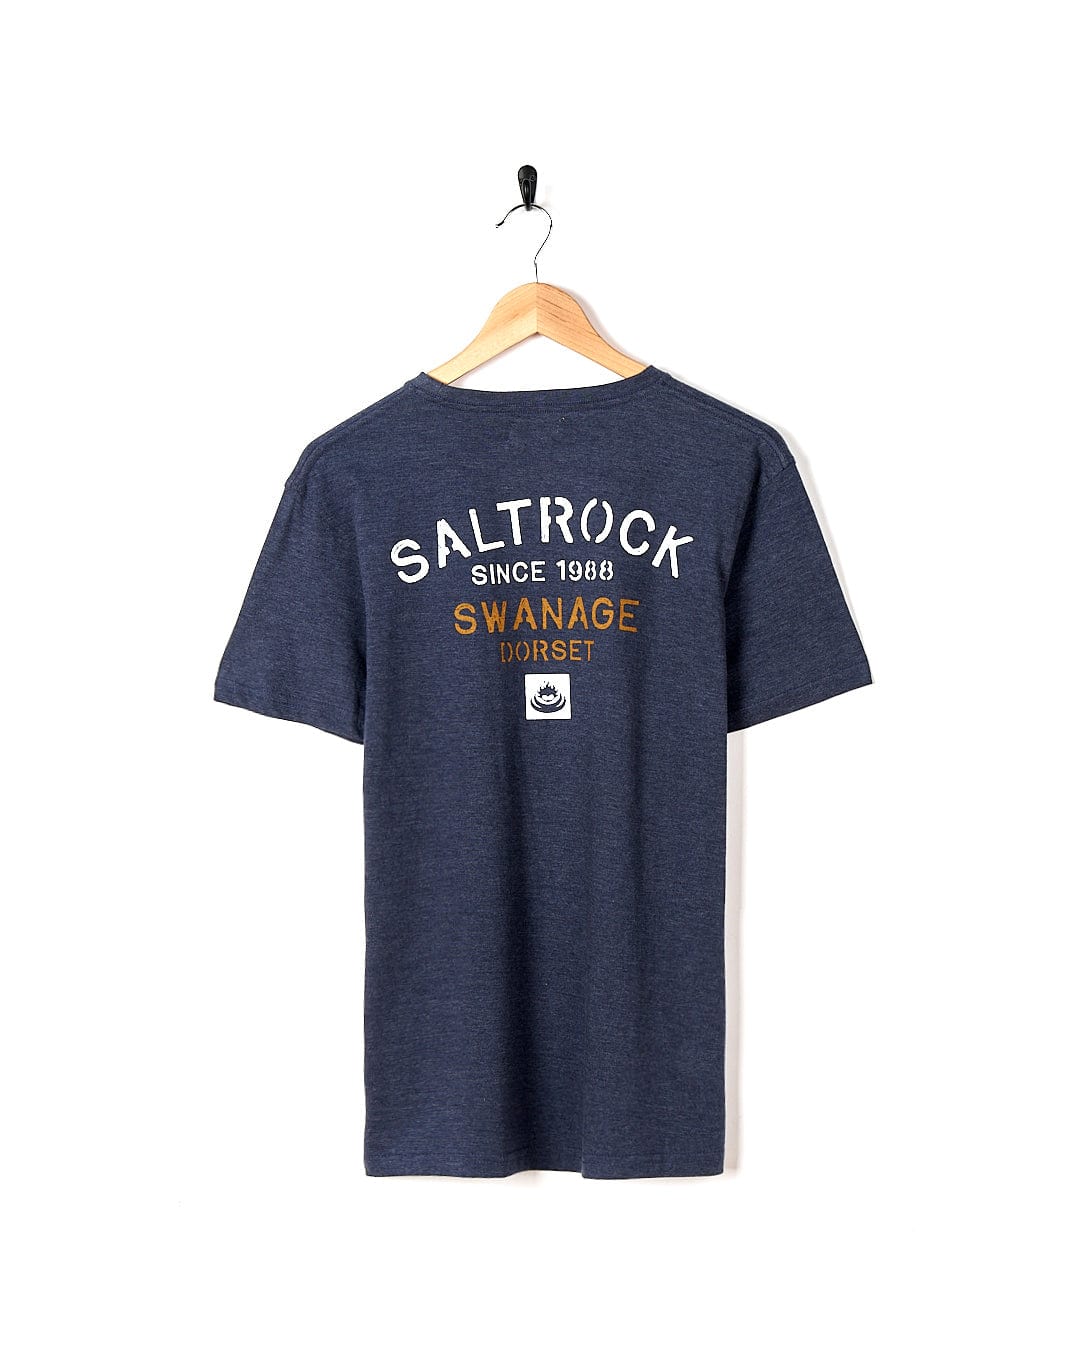 A Saltrock t-shirt that says Stencil - Mens Location T-Shirt - Swanage - Dress Blue swag.